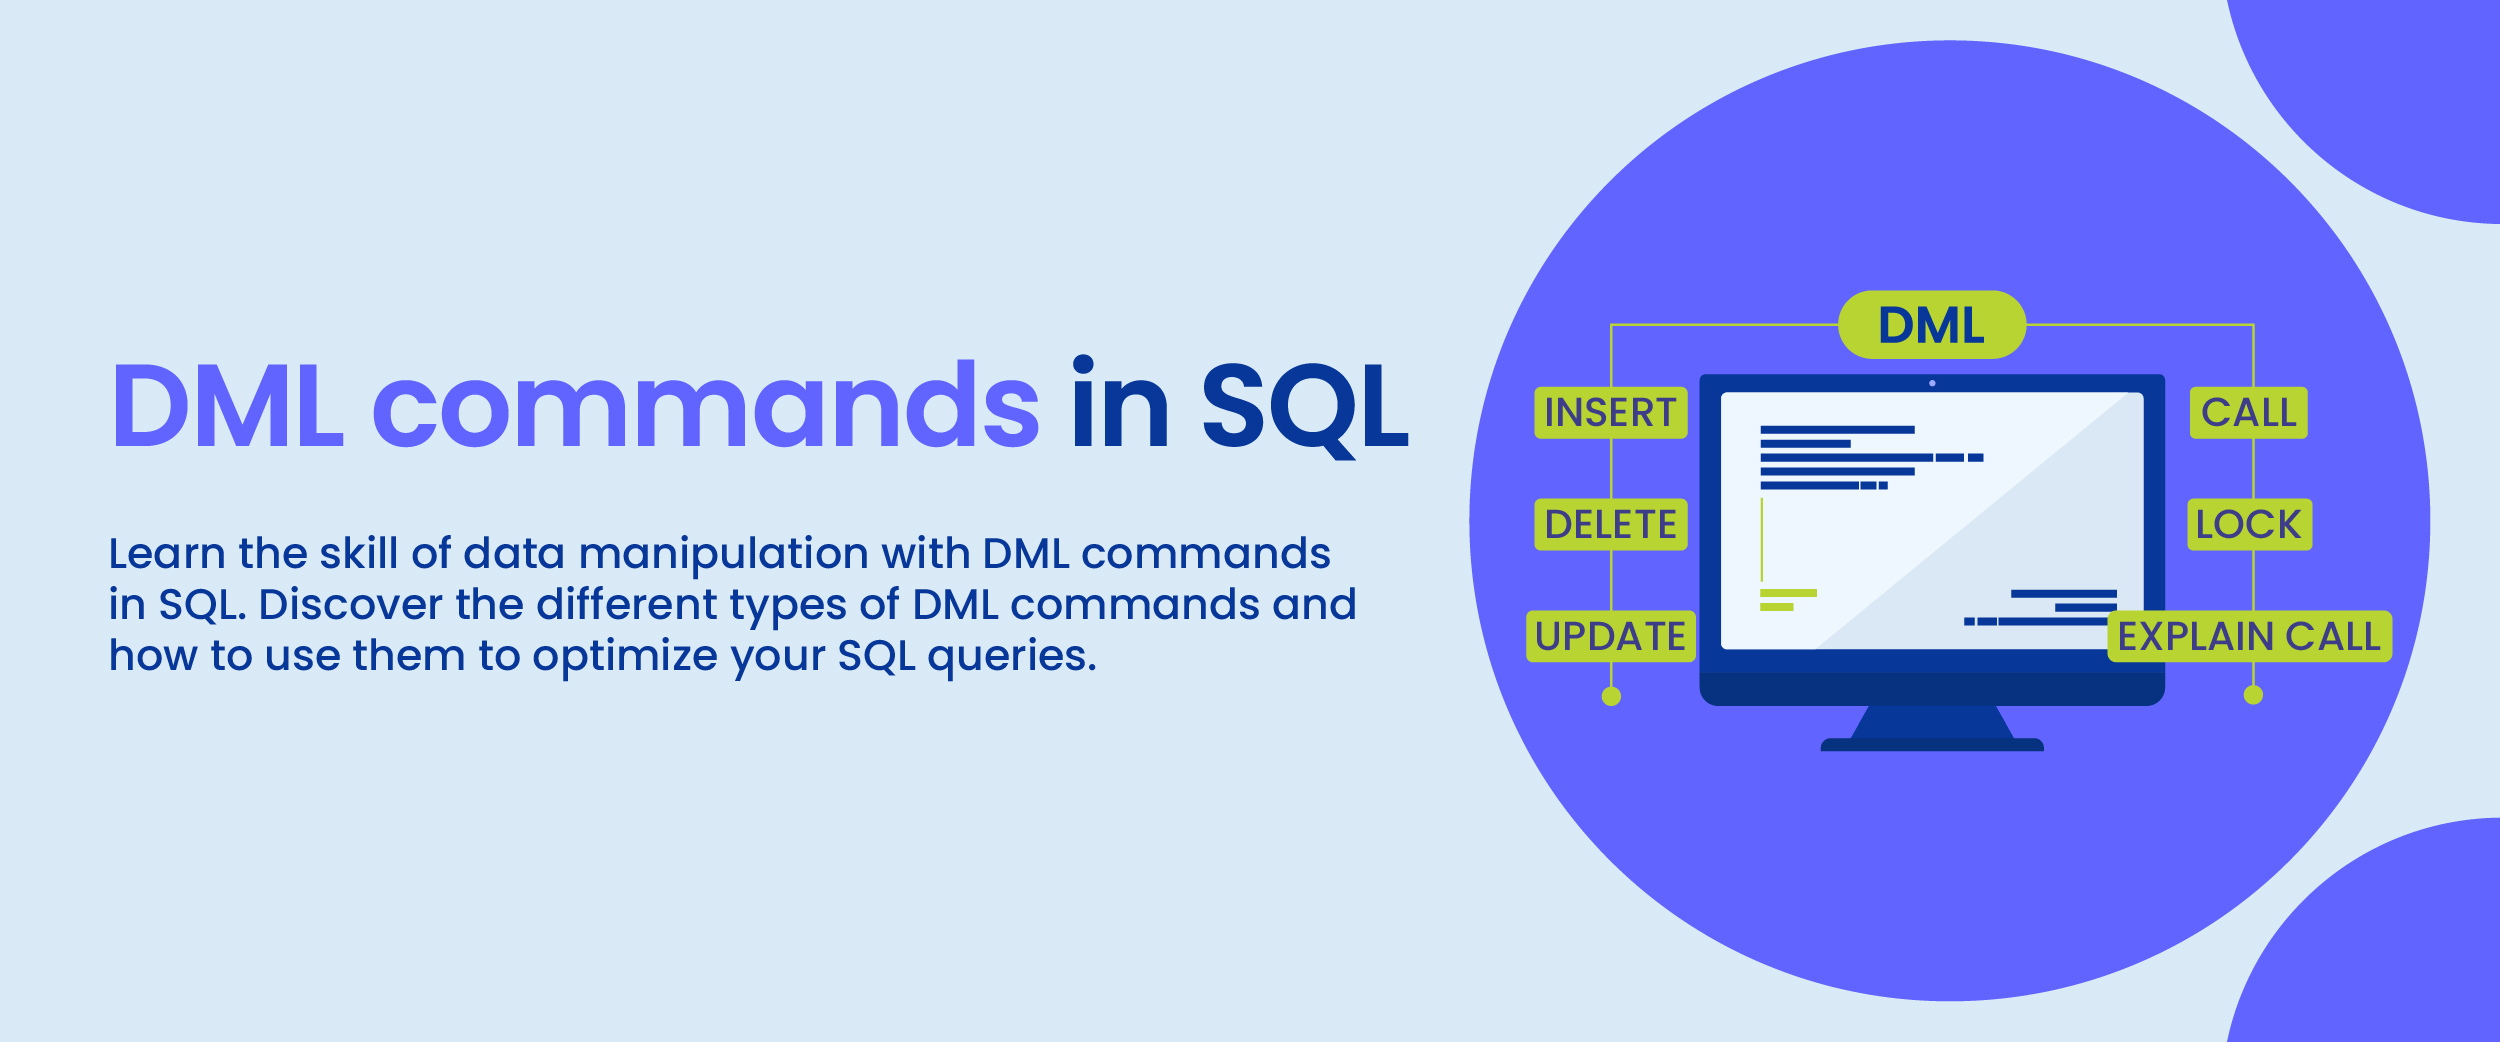 DML commands in SQL